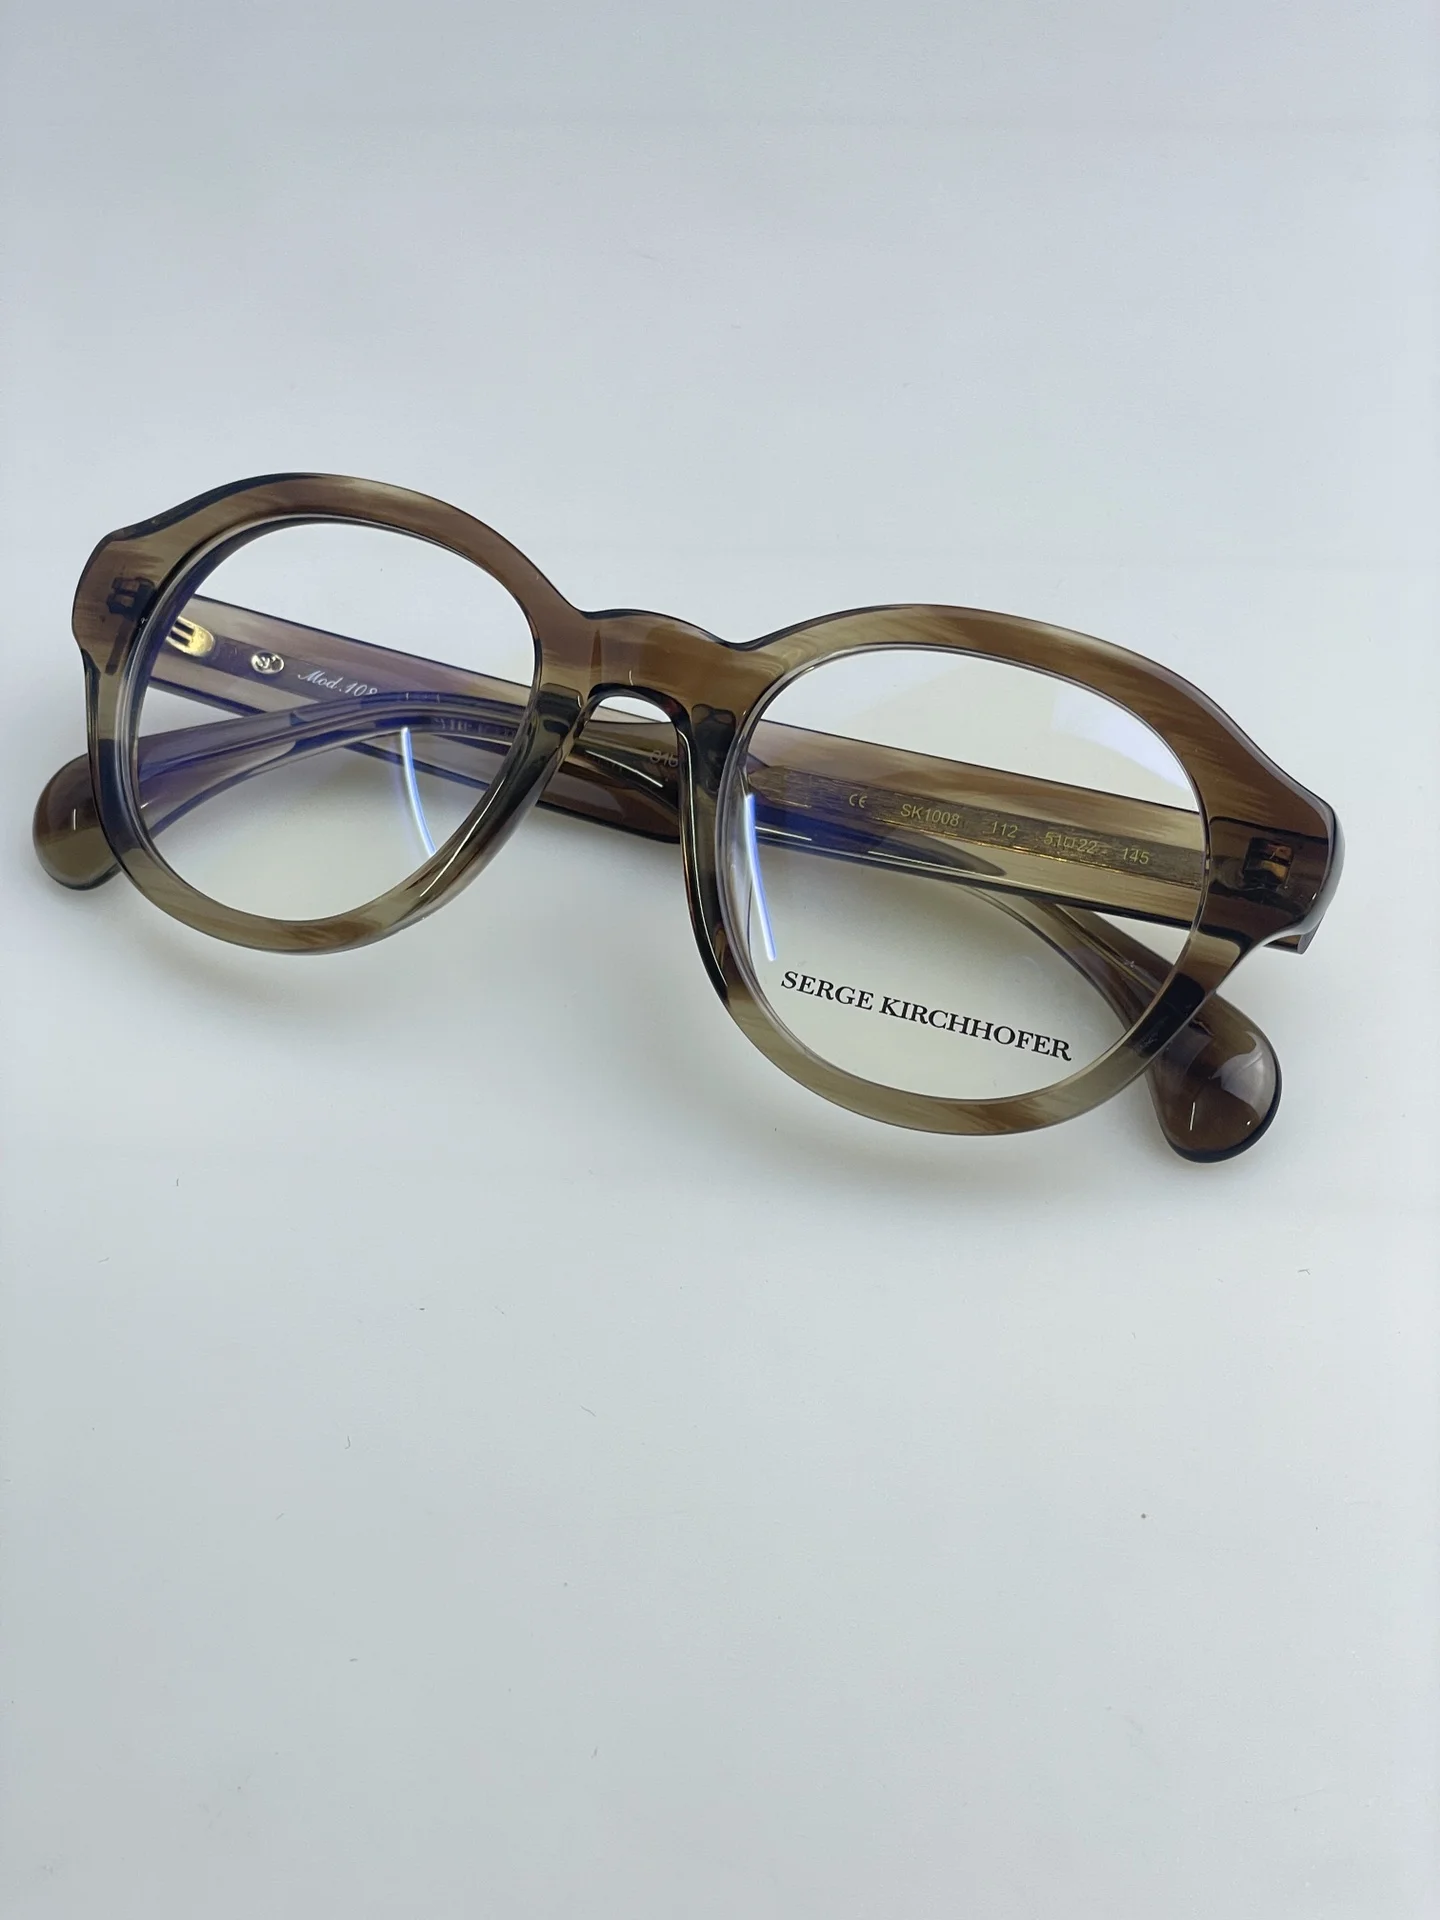 Swiss Serge Kirchhofe*r Belight Optical  Acetate Design Prescription Vintage Retro Eyeglasses Spectacle Frame Eyewear SK1008